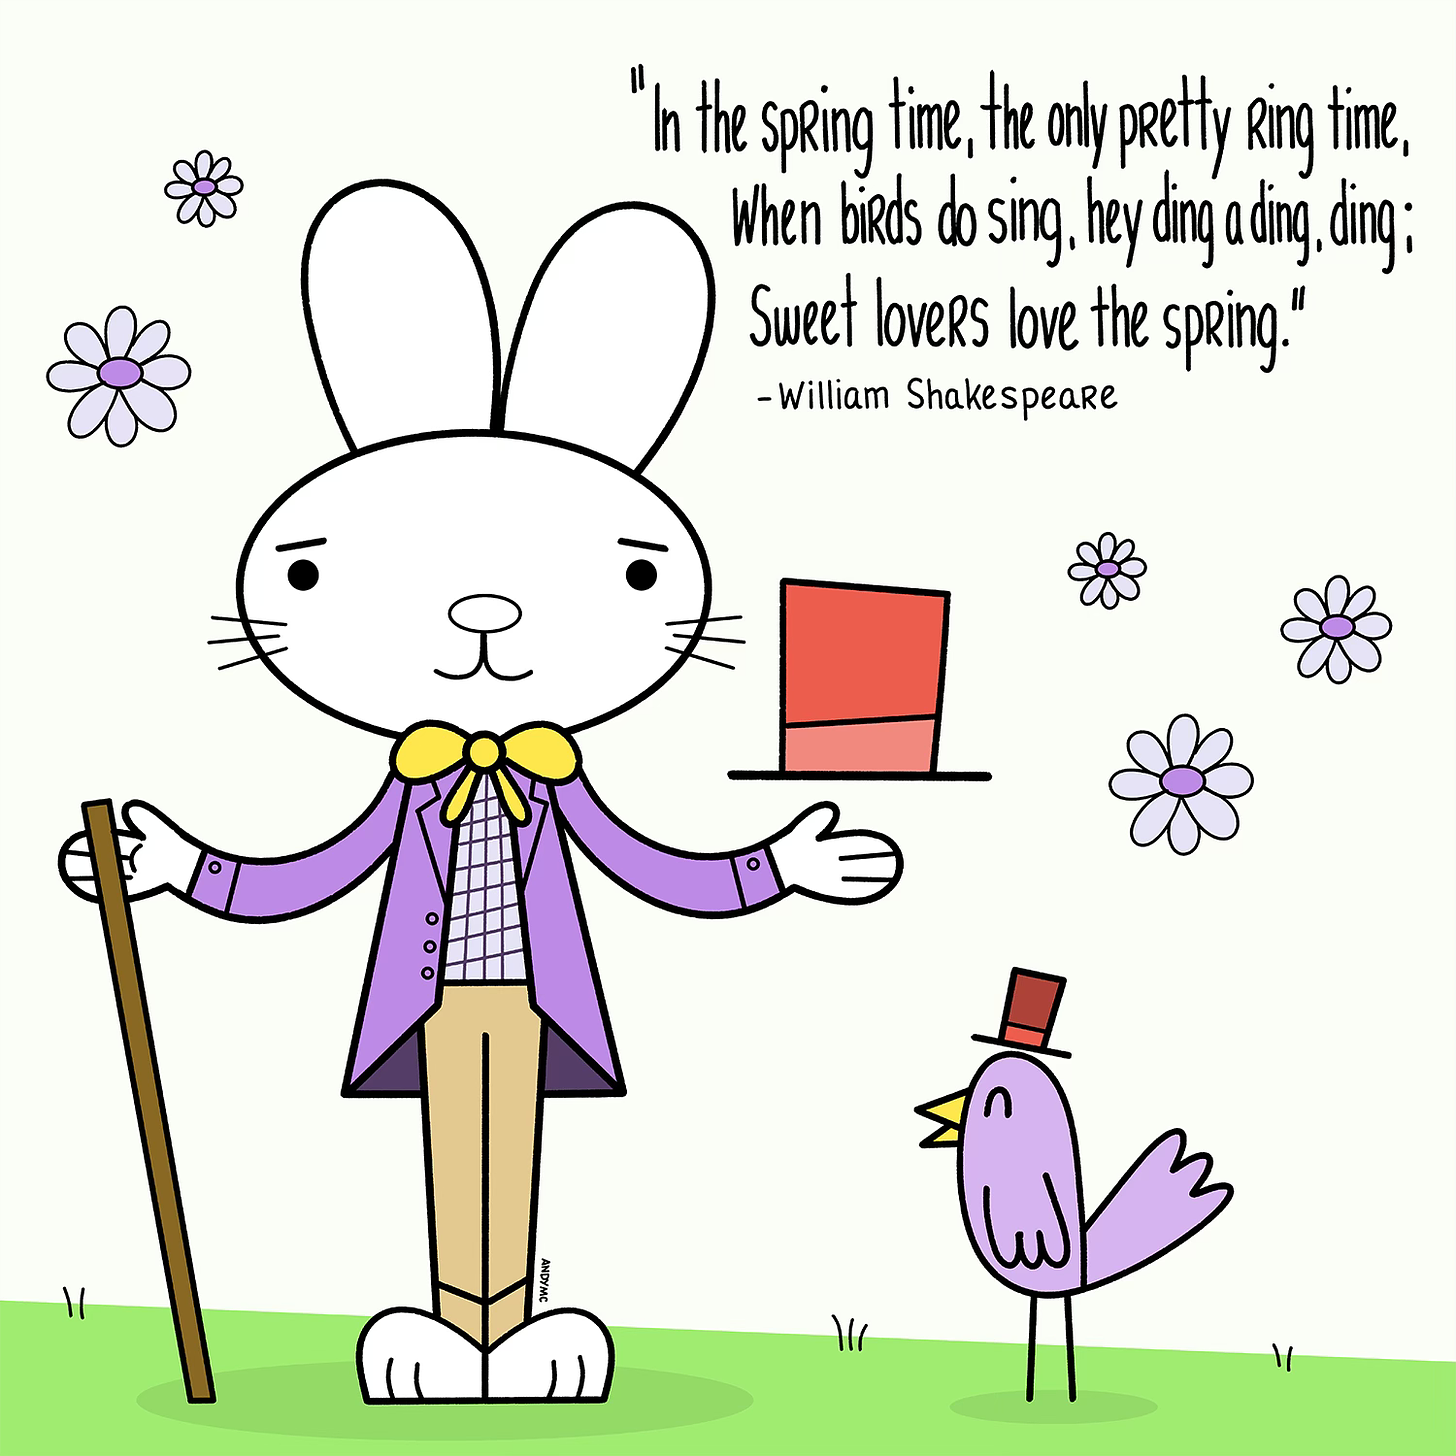 an illustration of a cartoon rabbit